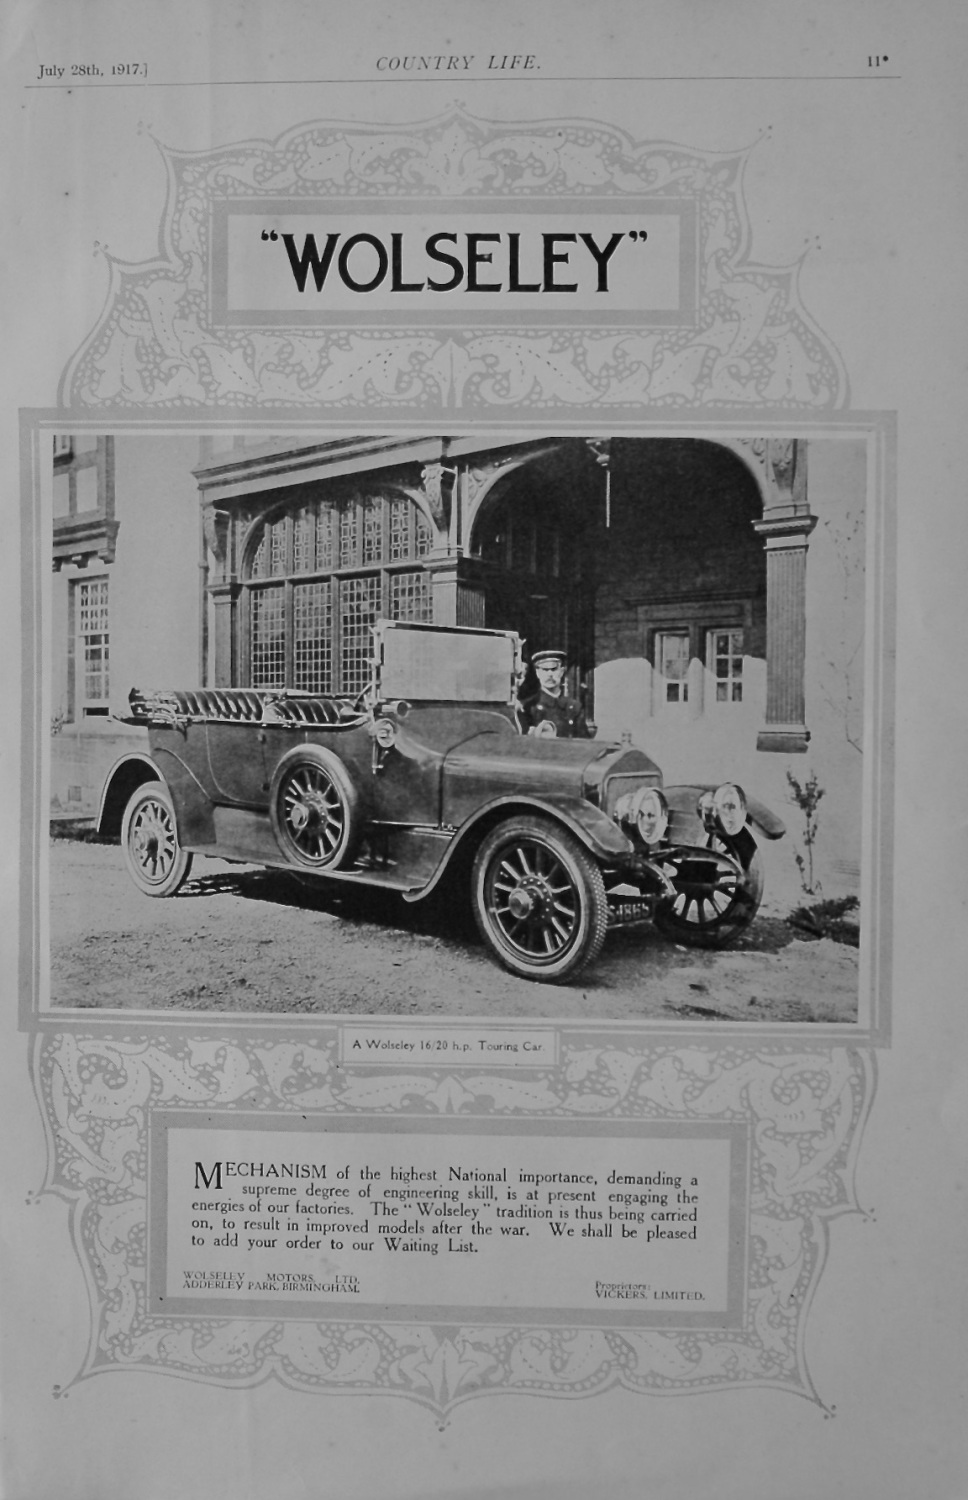 Wolseley 16/20 advert